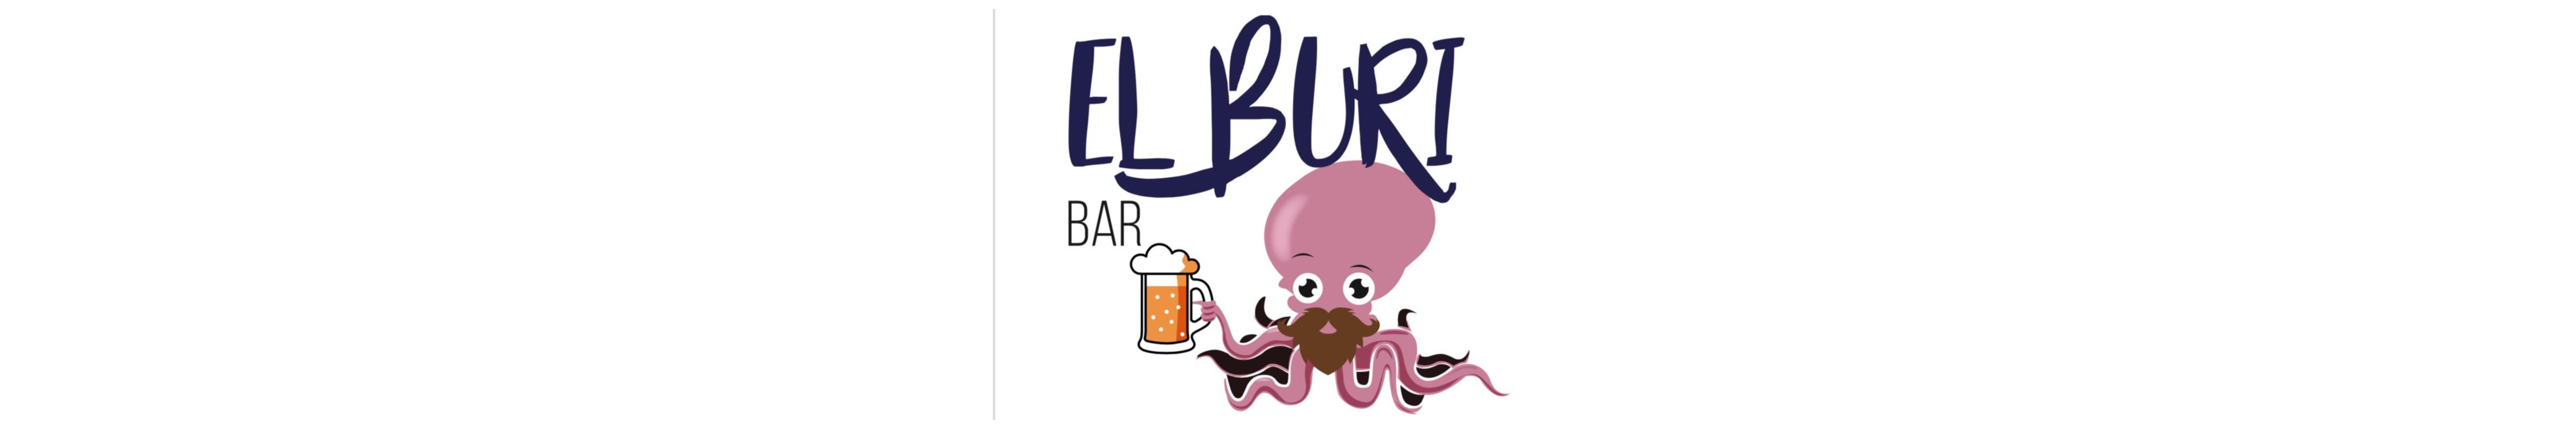 Bar El Buri